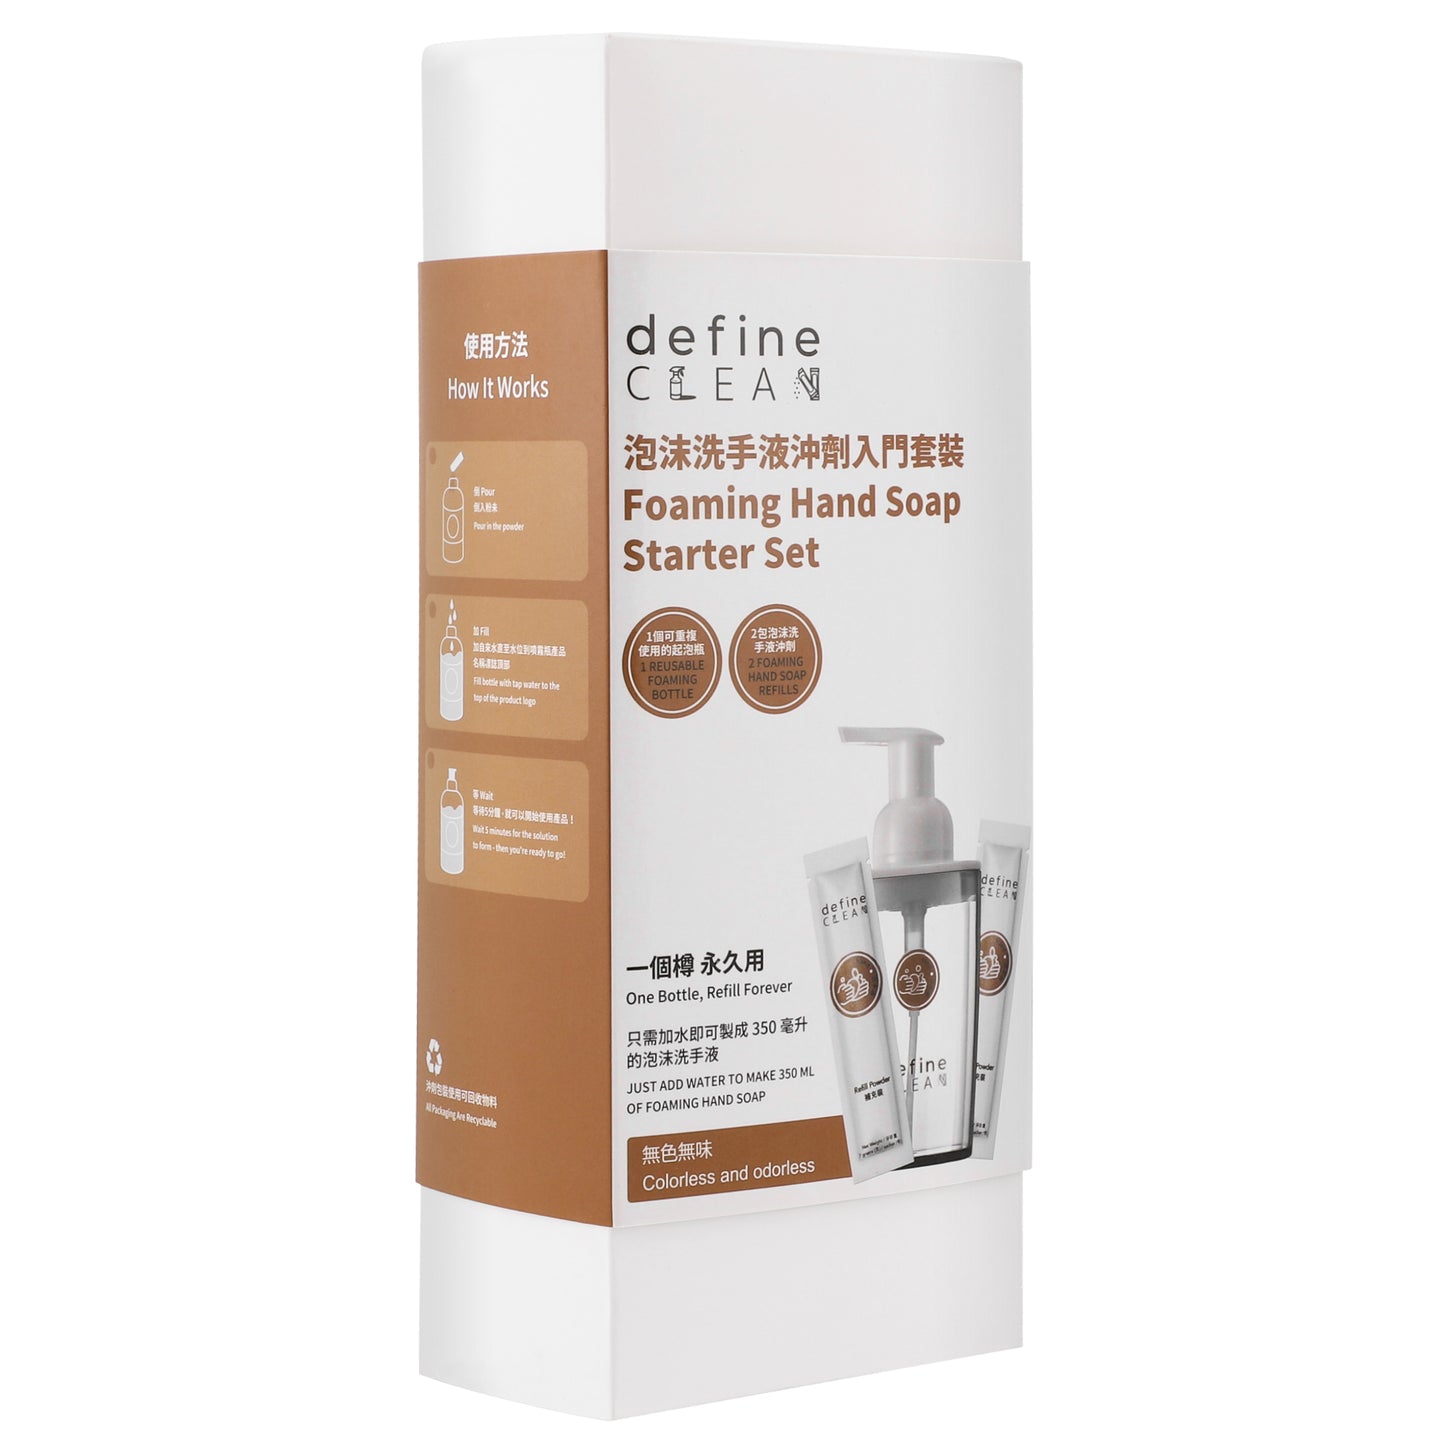 define CLEAN Foaming Hand Soap Starter Set